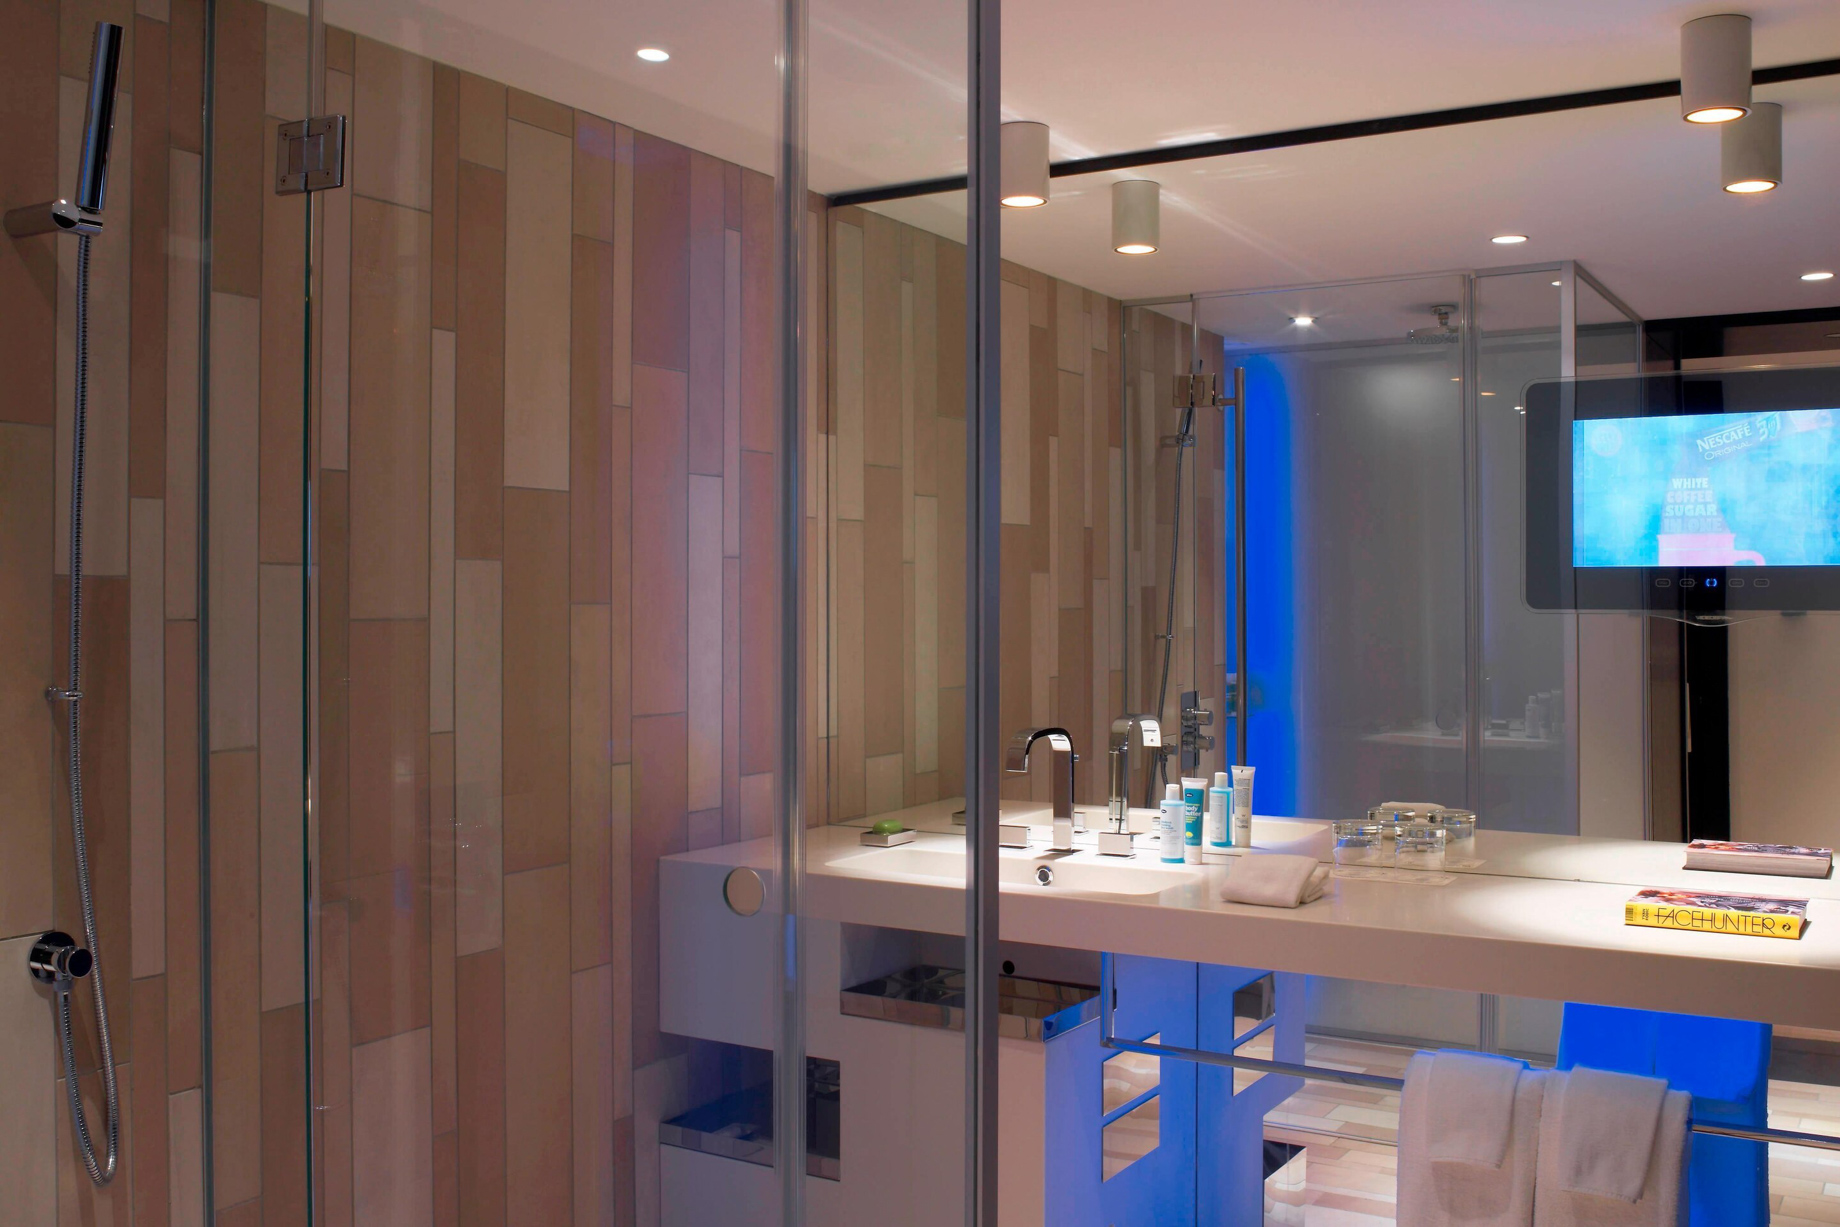 W London Hotel – London, United Kingdom – Suite Bathroom Vanity